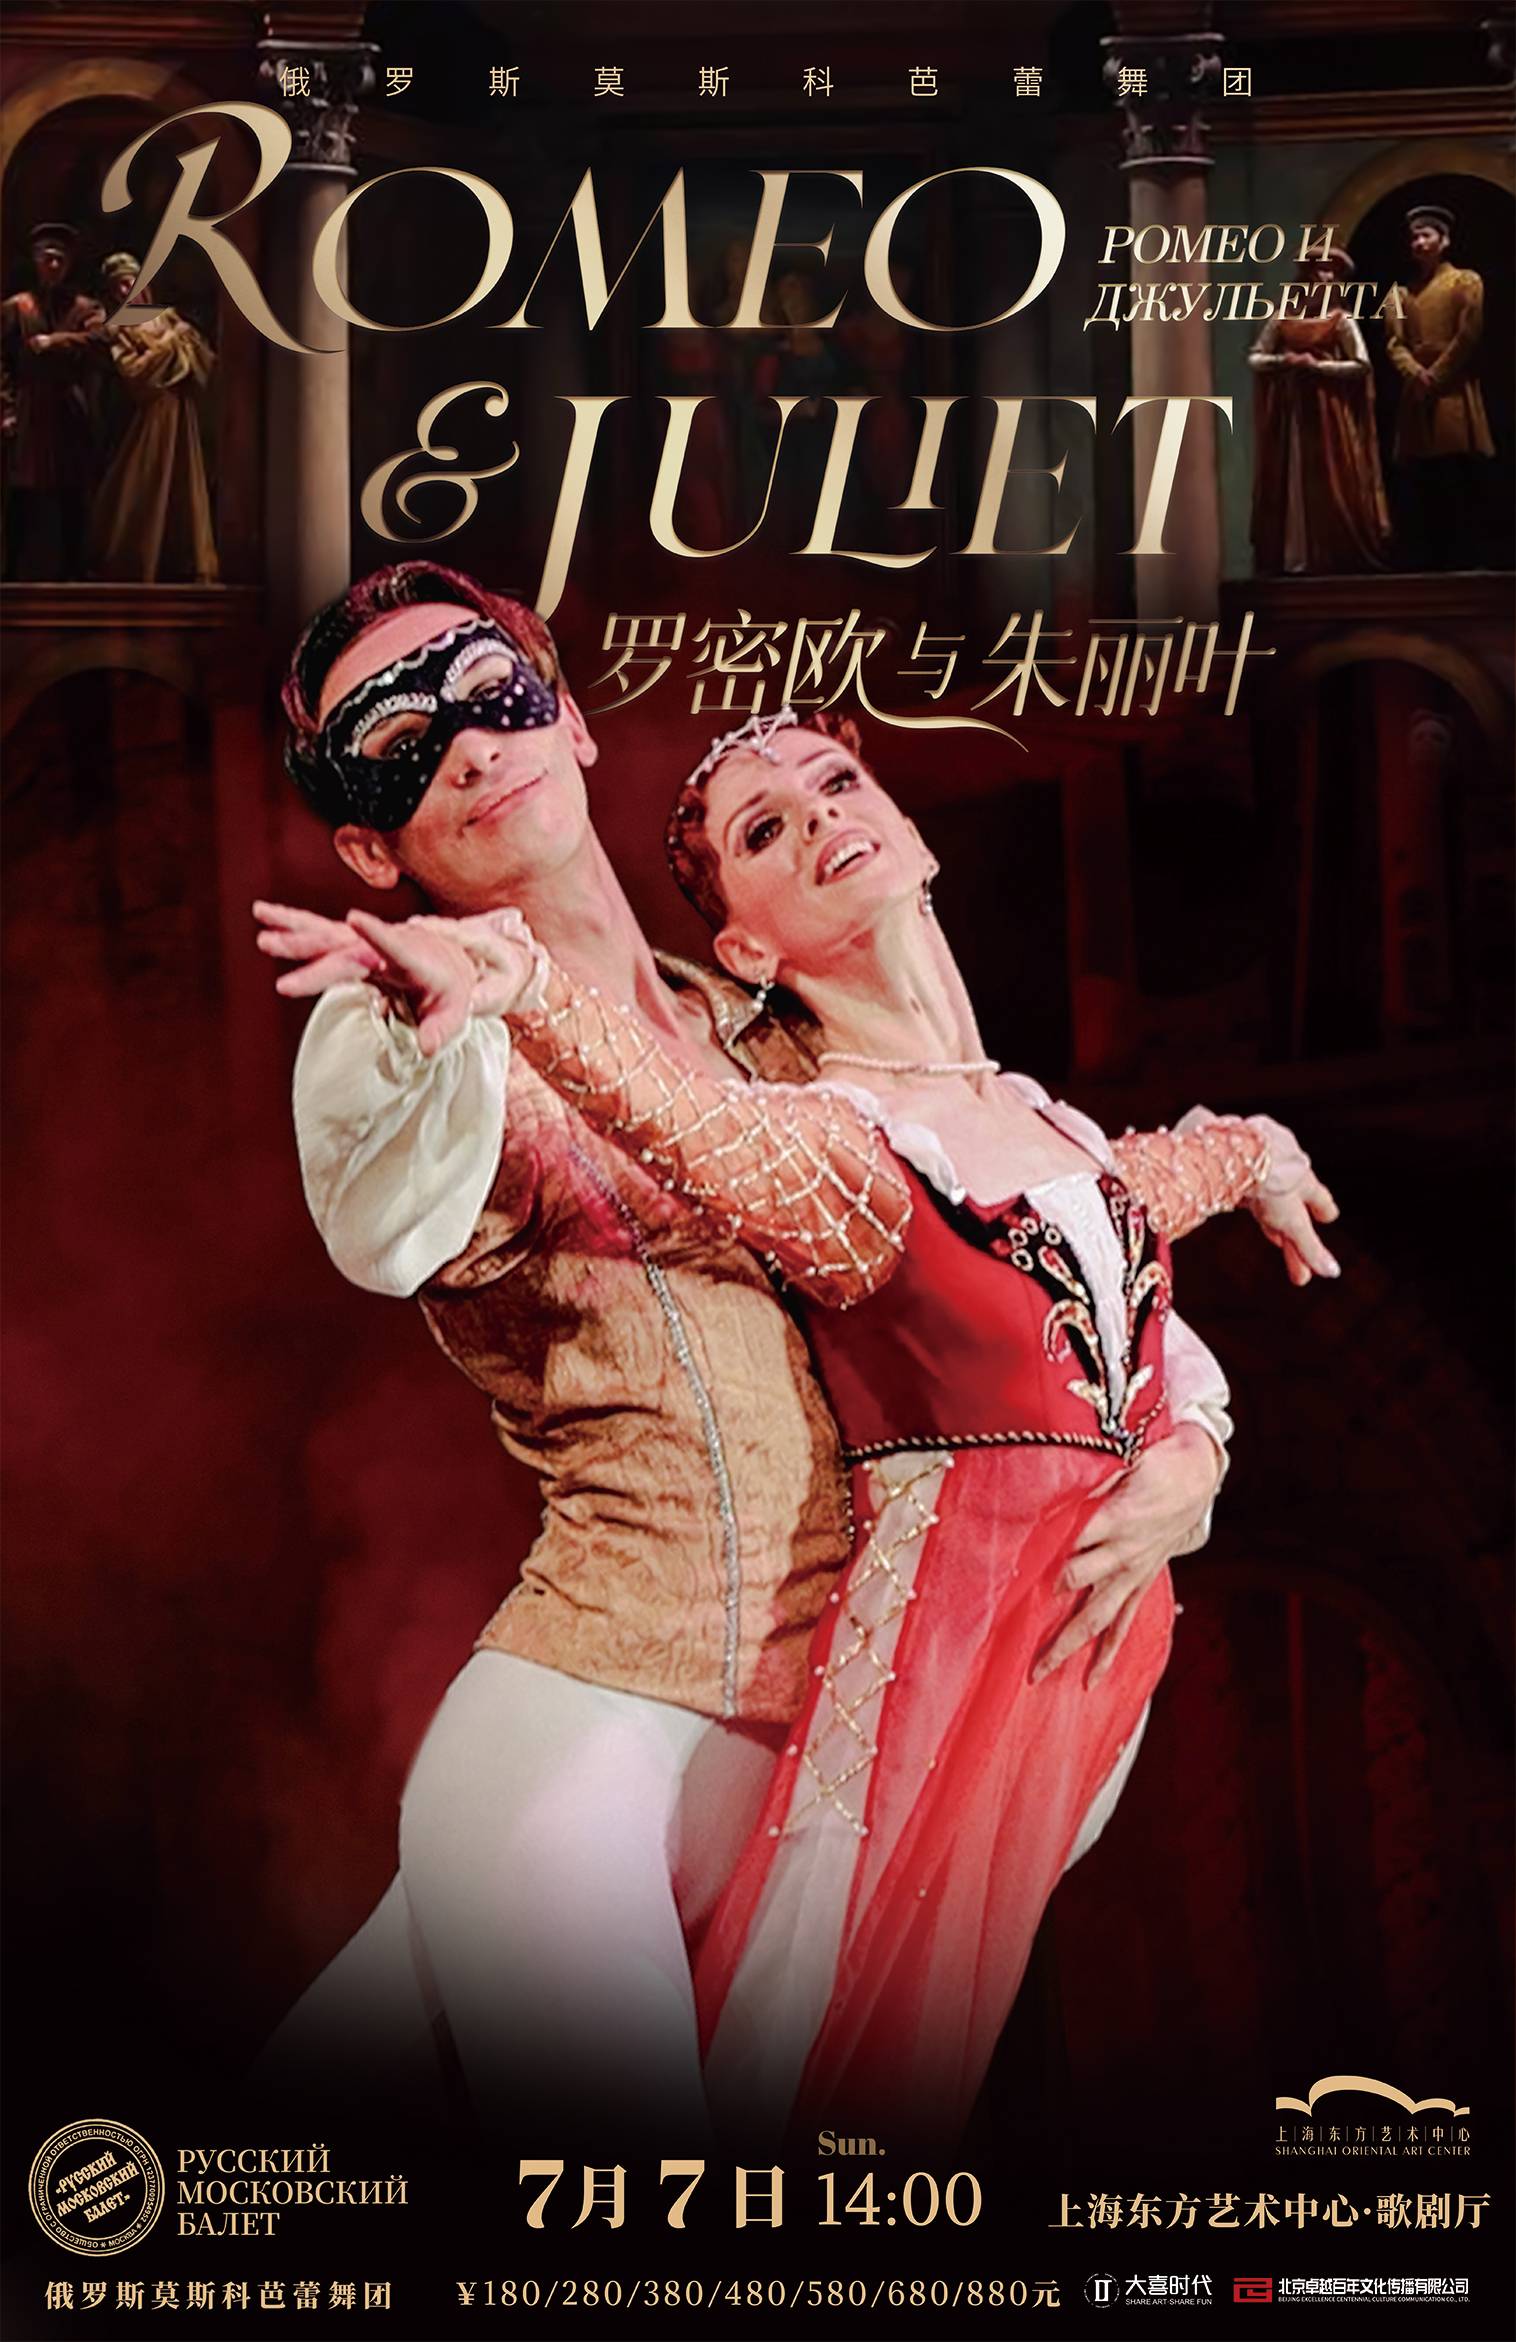 [30% OFF] Romeo & Juliet Russian Moscow Ballet